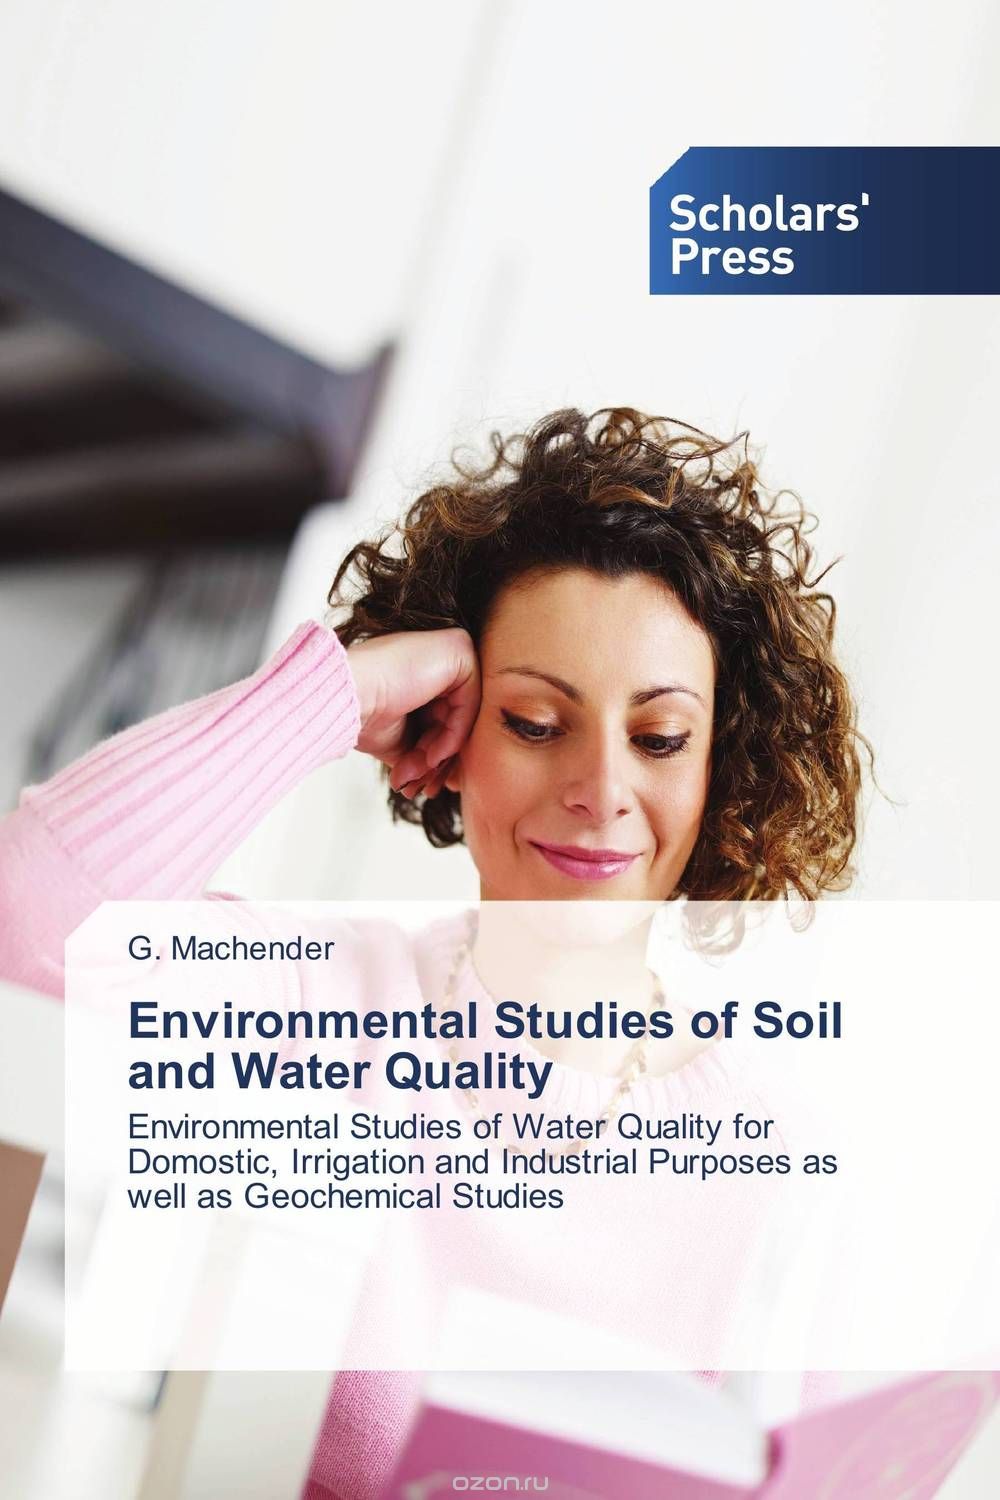 Скачать книгу "Environmental Studies of Soil and Water Quality"